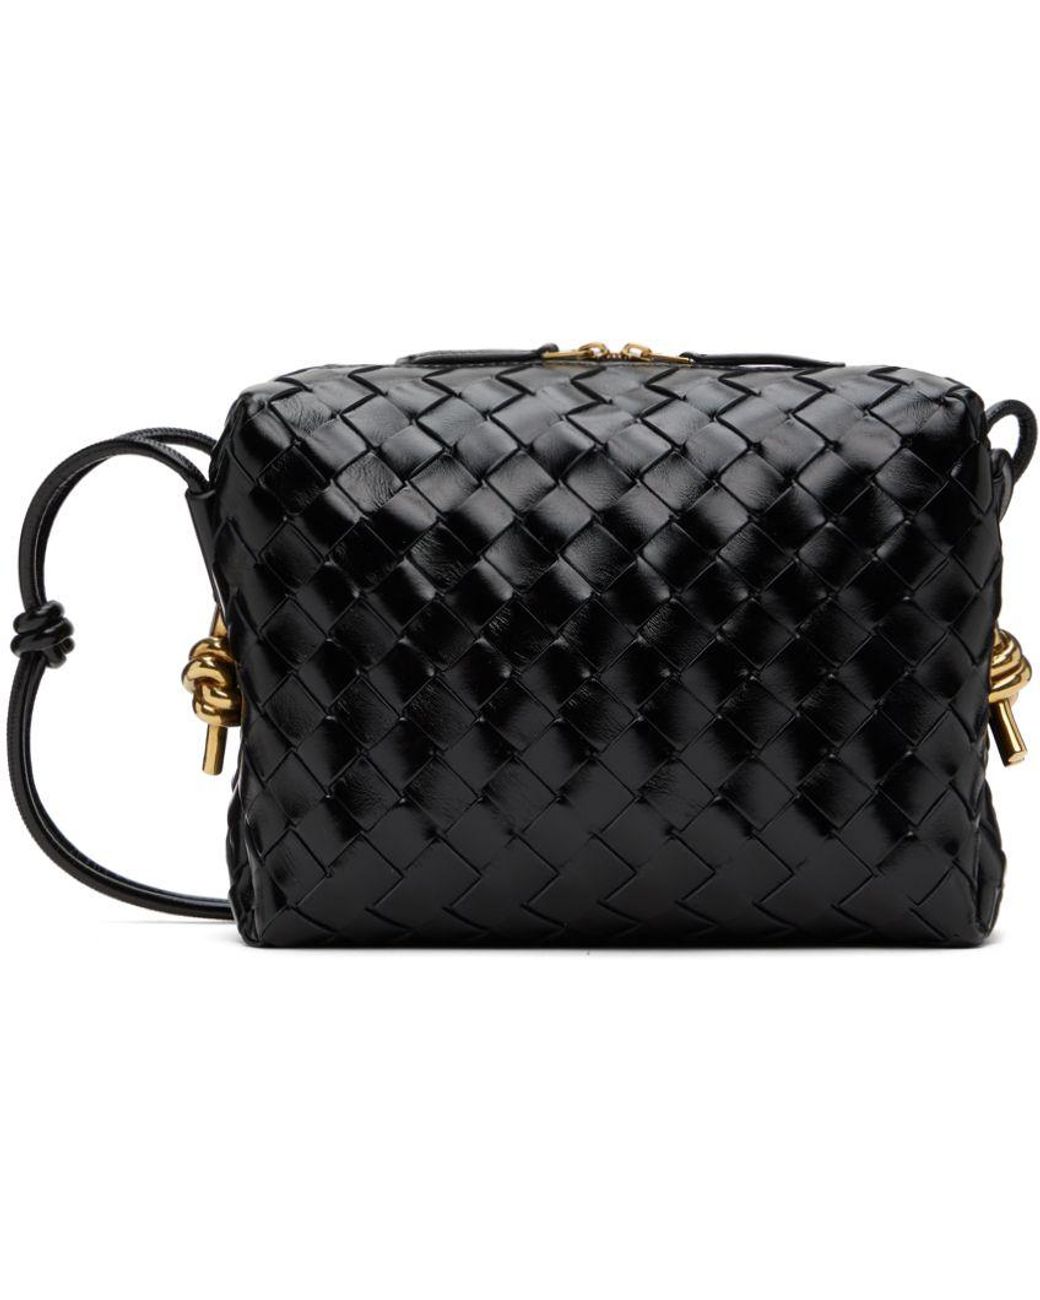 Bottega Veneta® Women's Small Loop Camera Bag in Black. Shop online now.